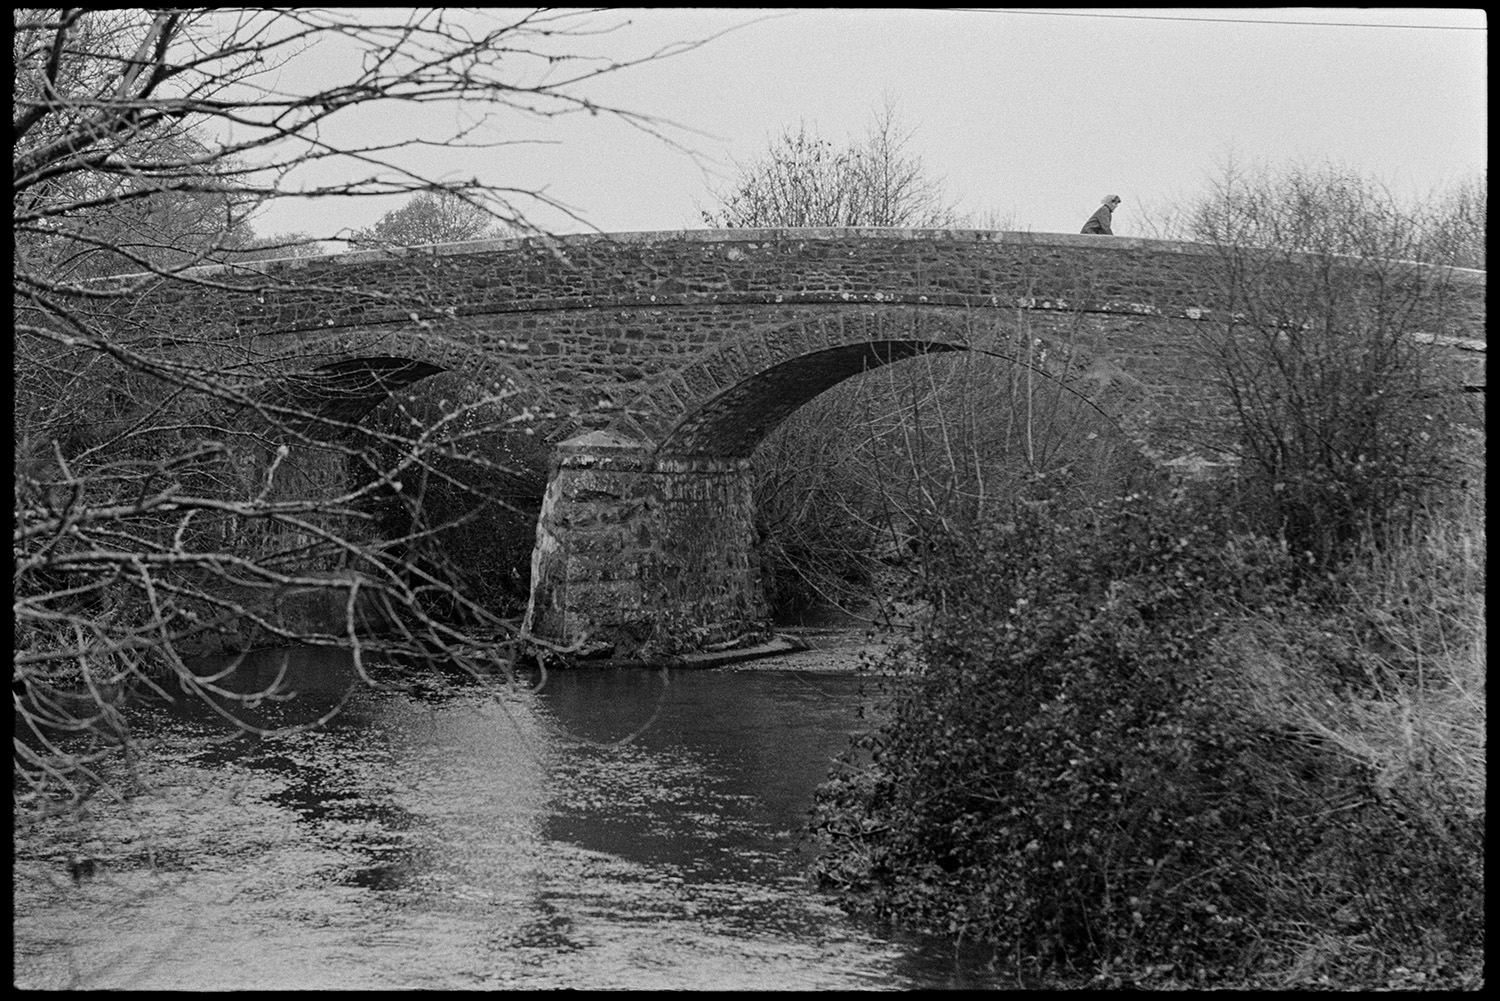 Ancient stone bridge. 
[A person walking or cycling over a stone bridge with arches at New Bridge, Monkokehampton.]